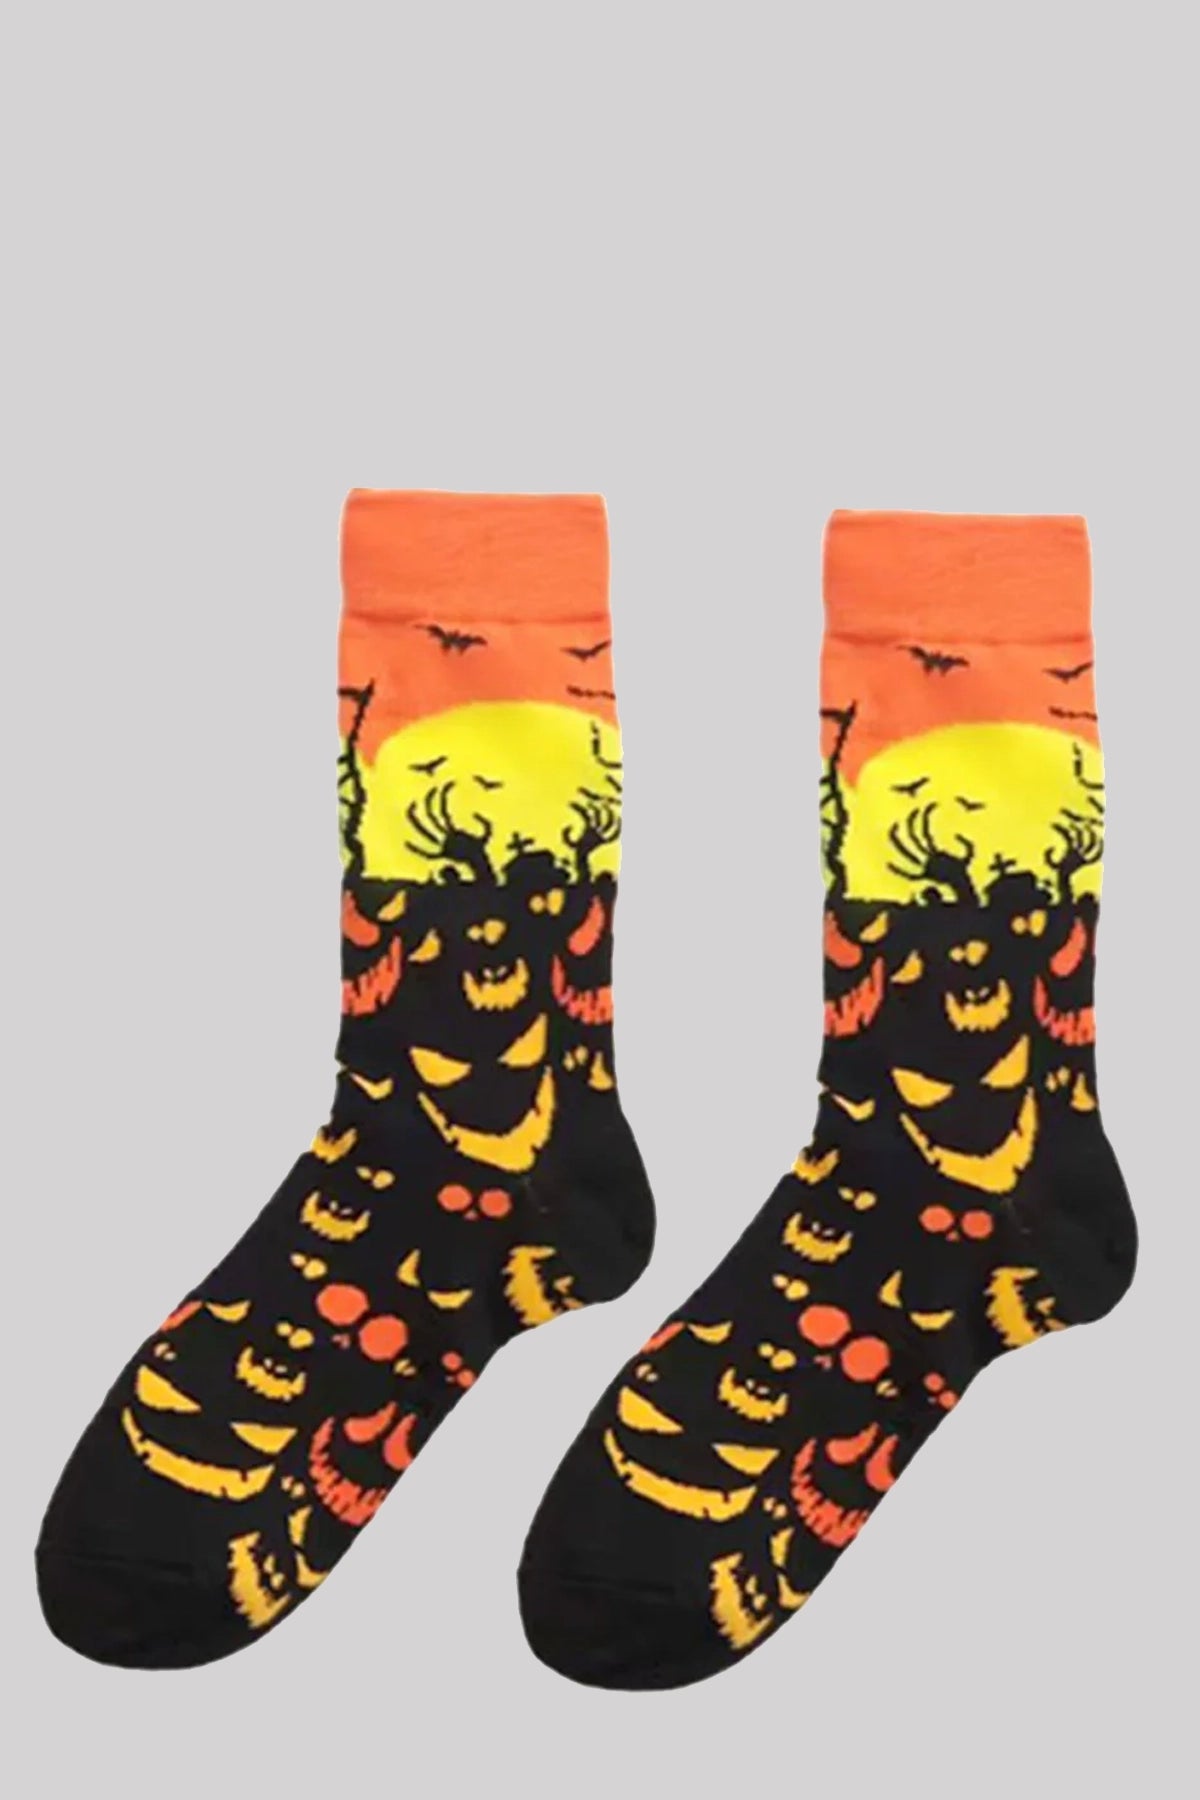 Ro Rox Halloween Spooky Gothic Crew Ankle Socks